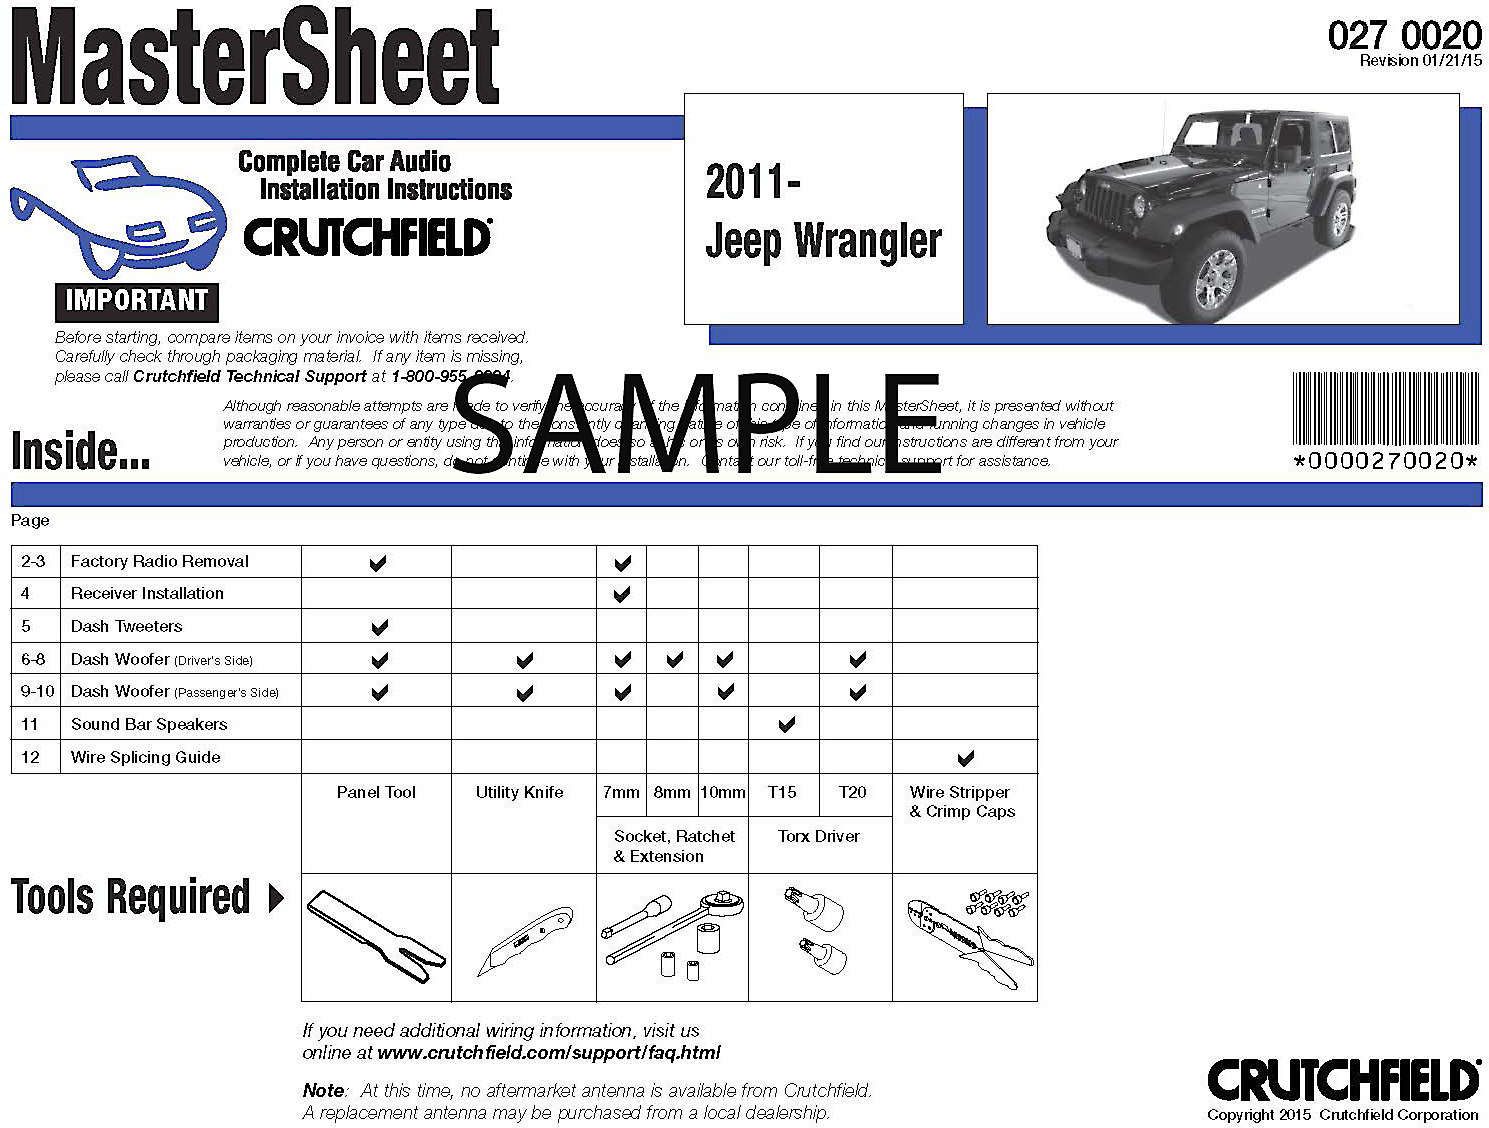 Crutchfield Mastersheet Toyota Pdf Download